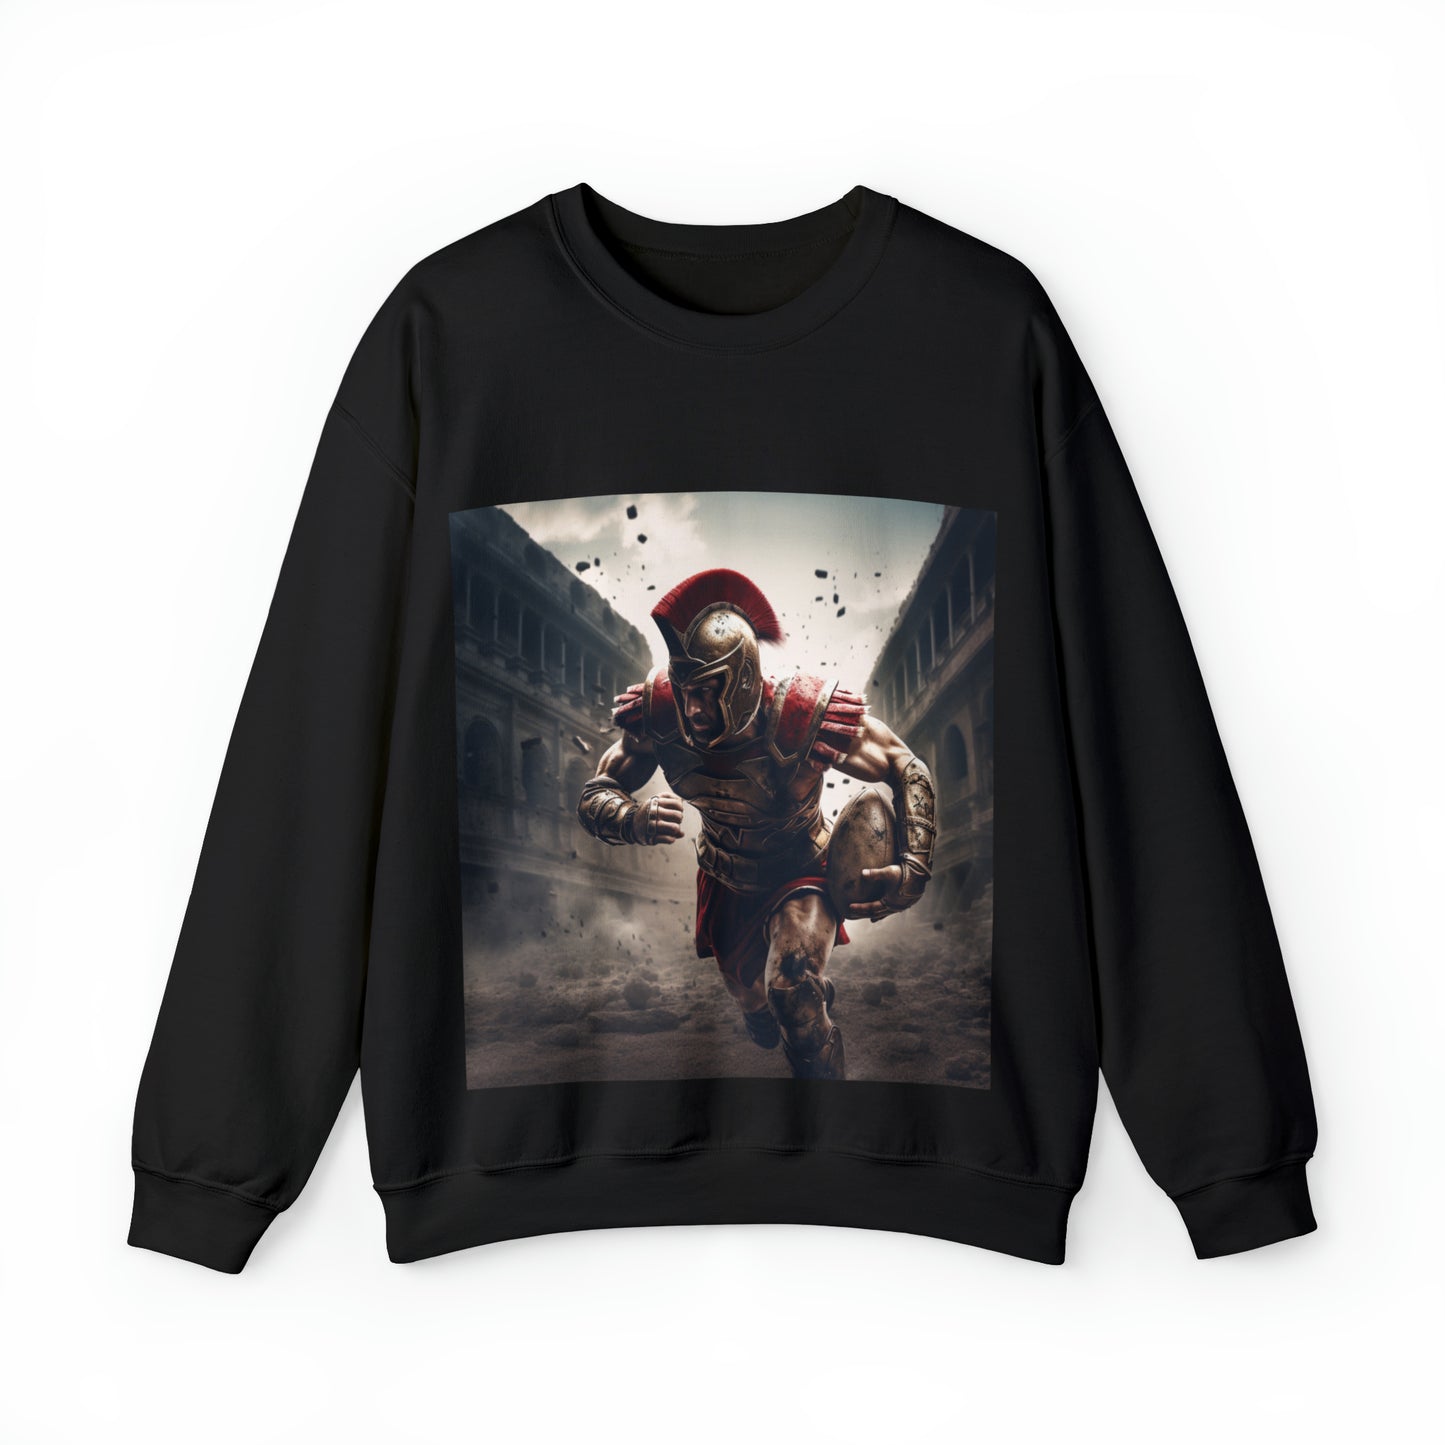 Spartan Rugby - black sweatshirt